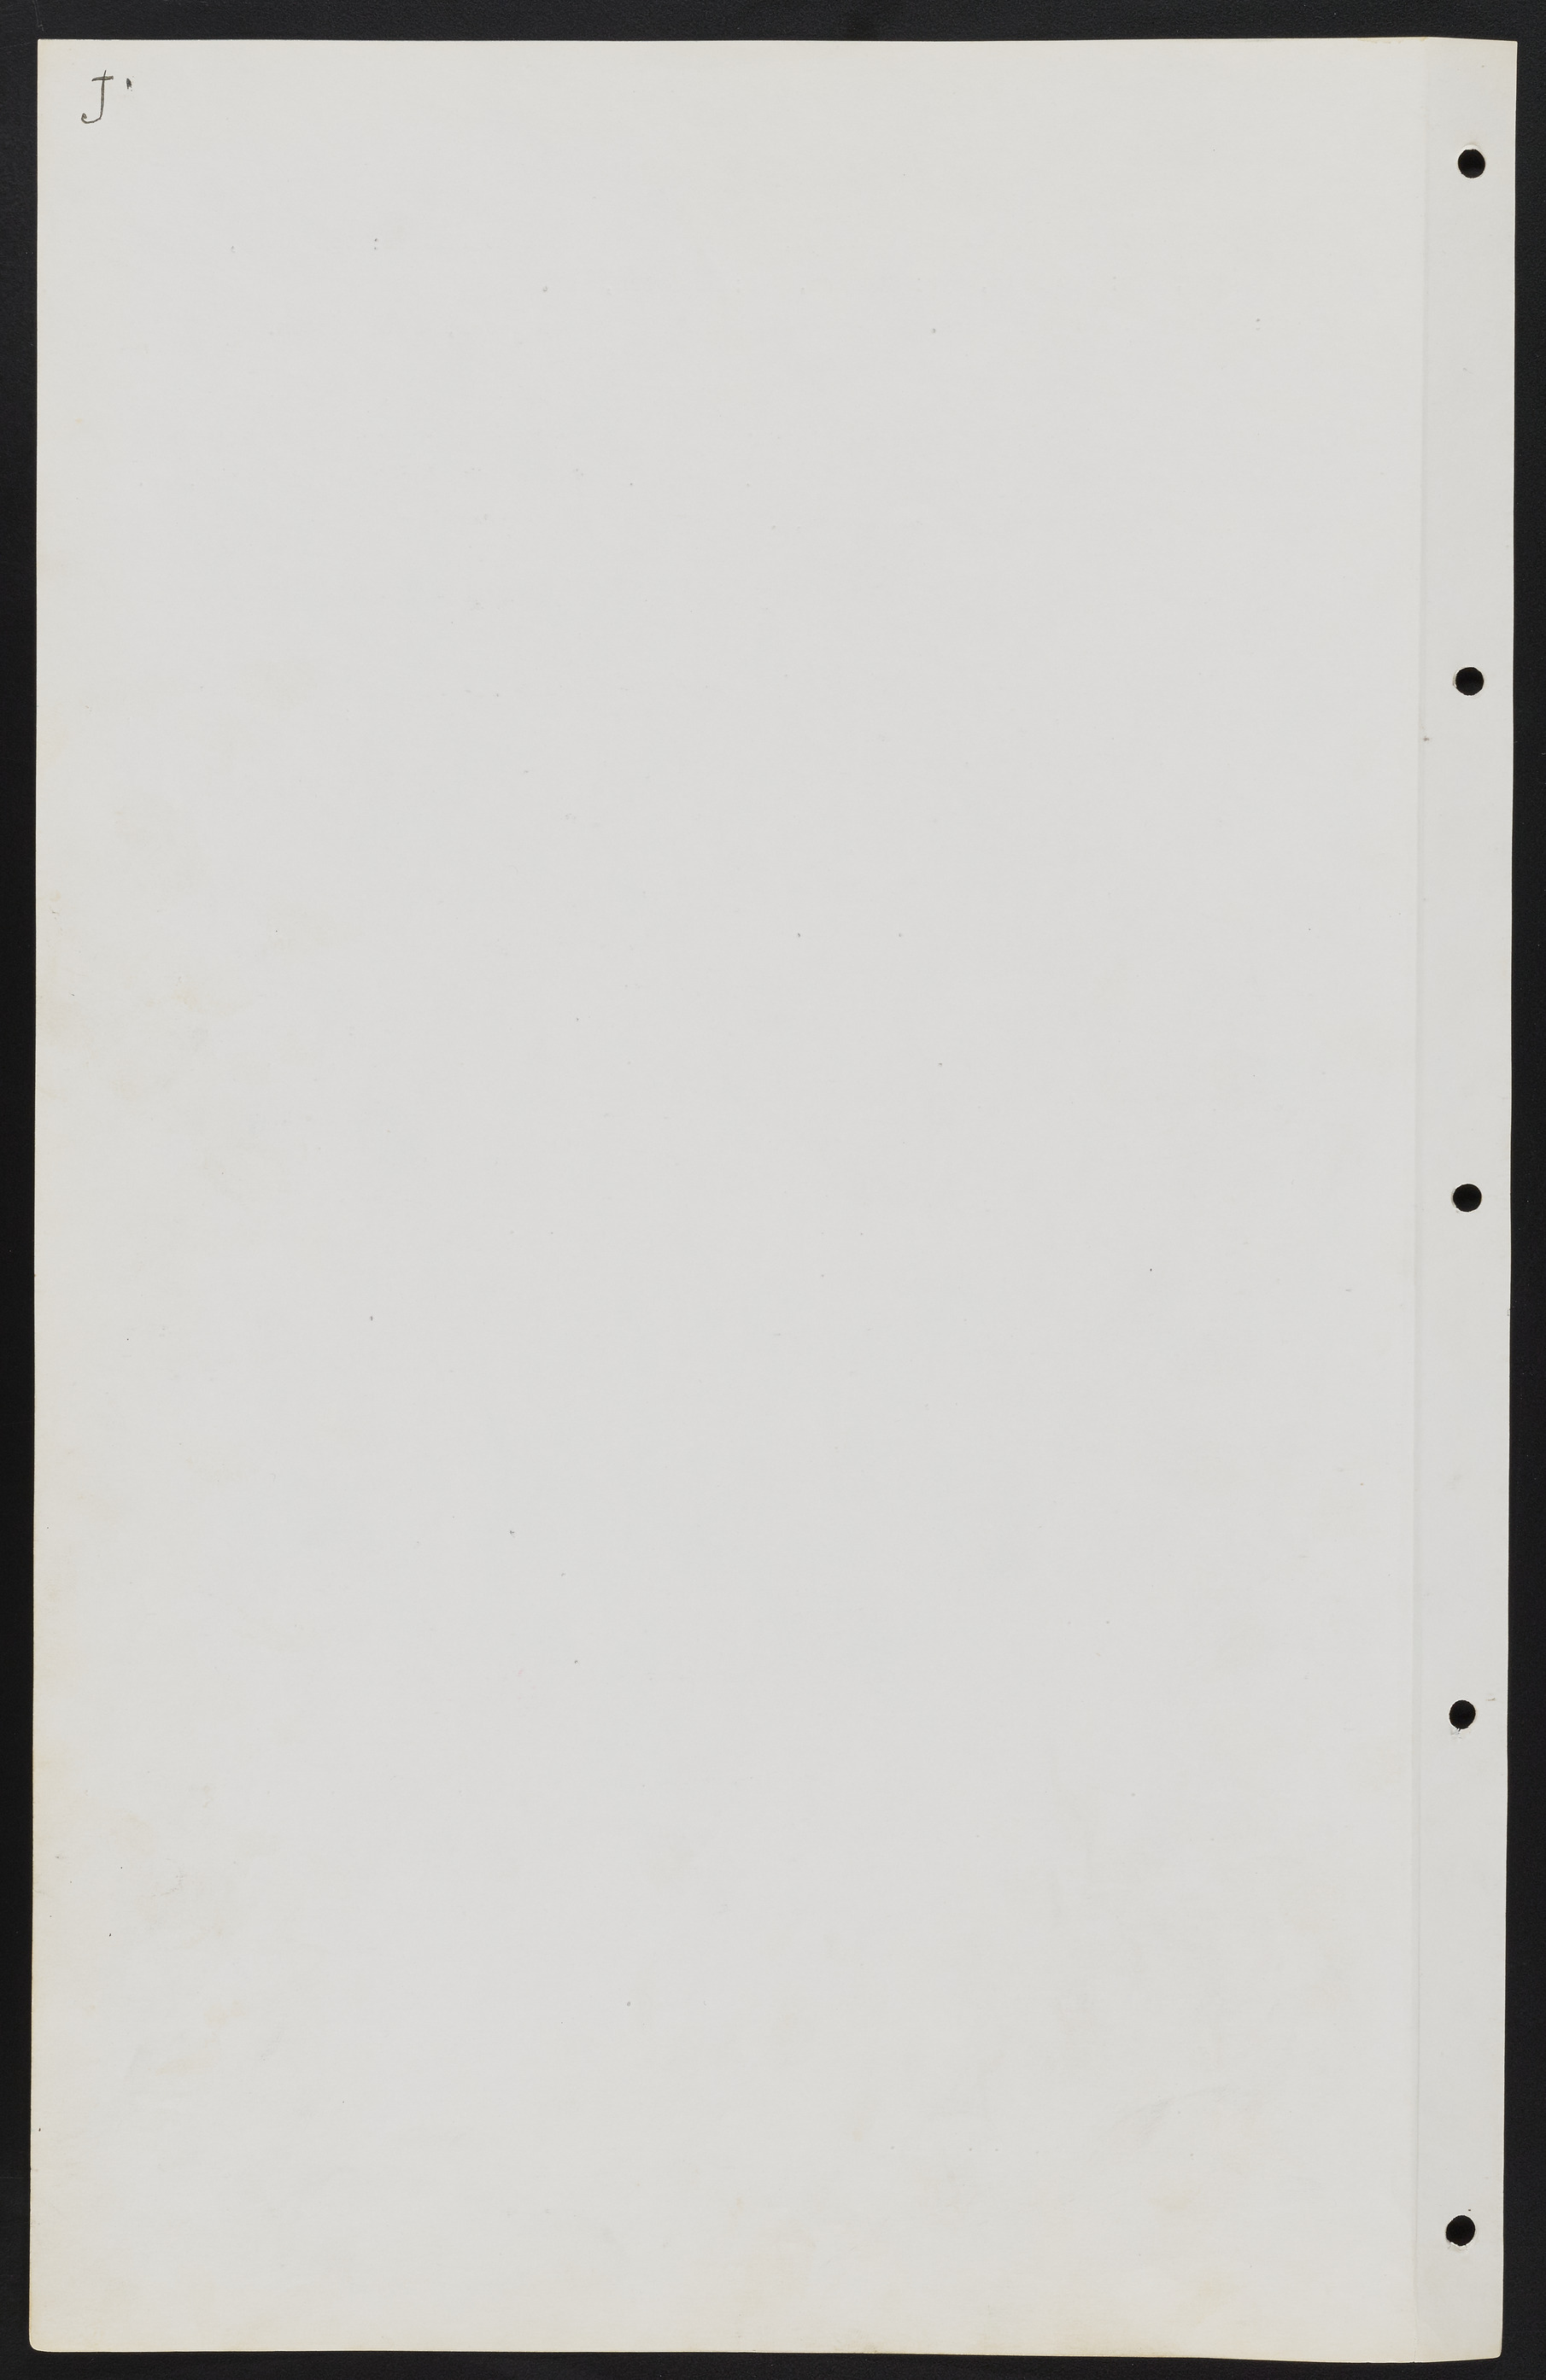 Las Vegas City Commission Minutes, June 22, 1911 to February 7, 1922, lvc000001-12